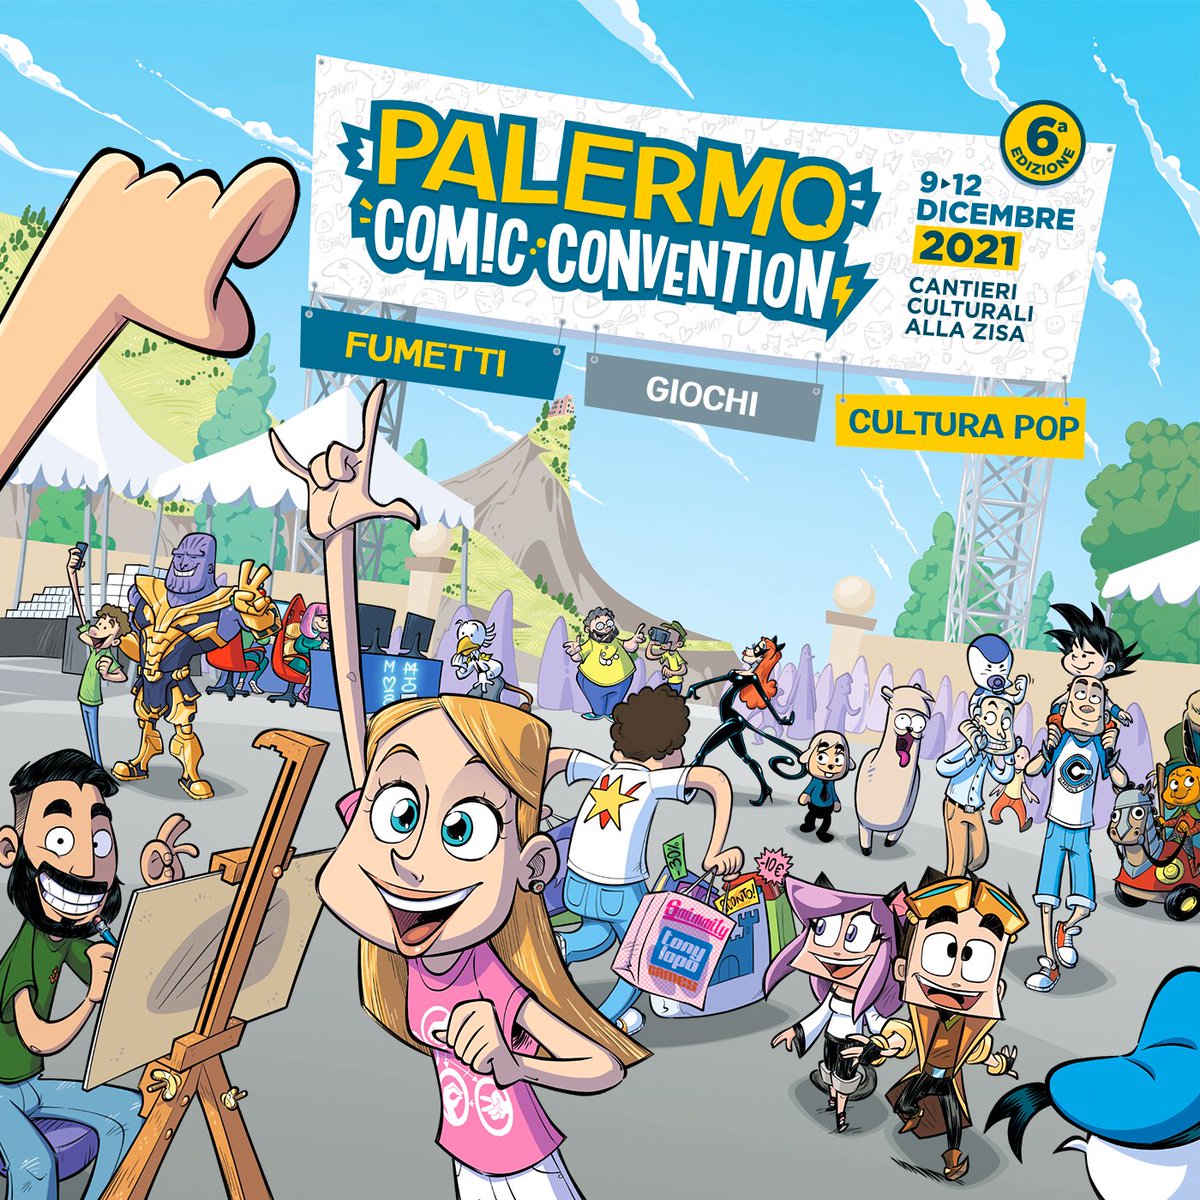 Palermo comic convention